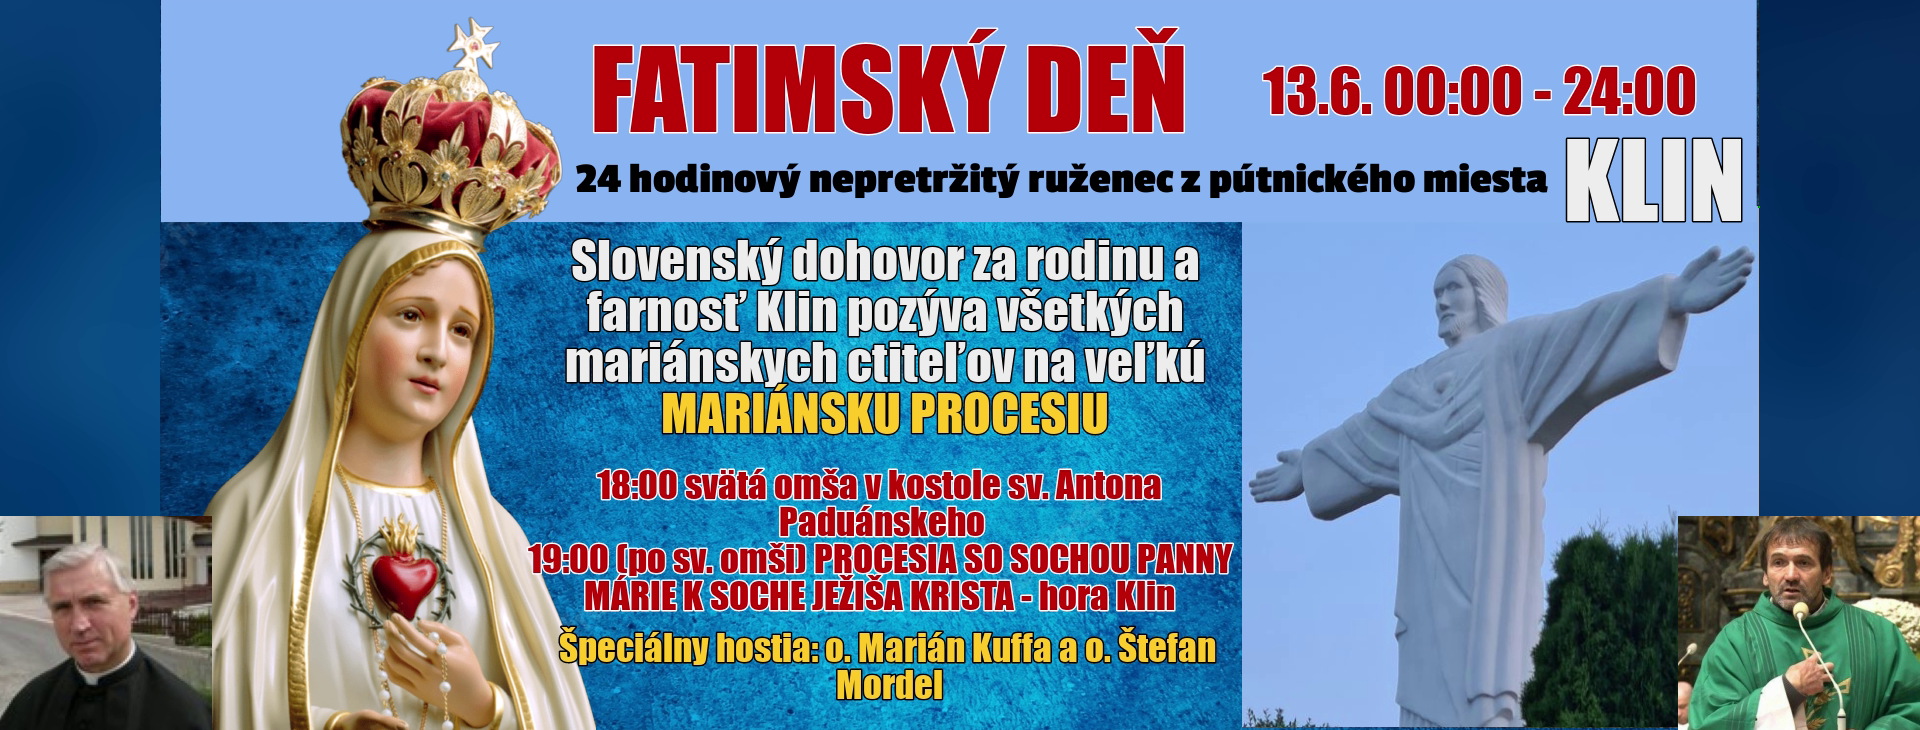 fatimsky_deň_(1)_V6